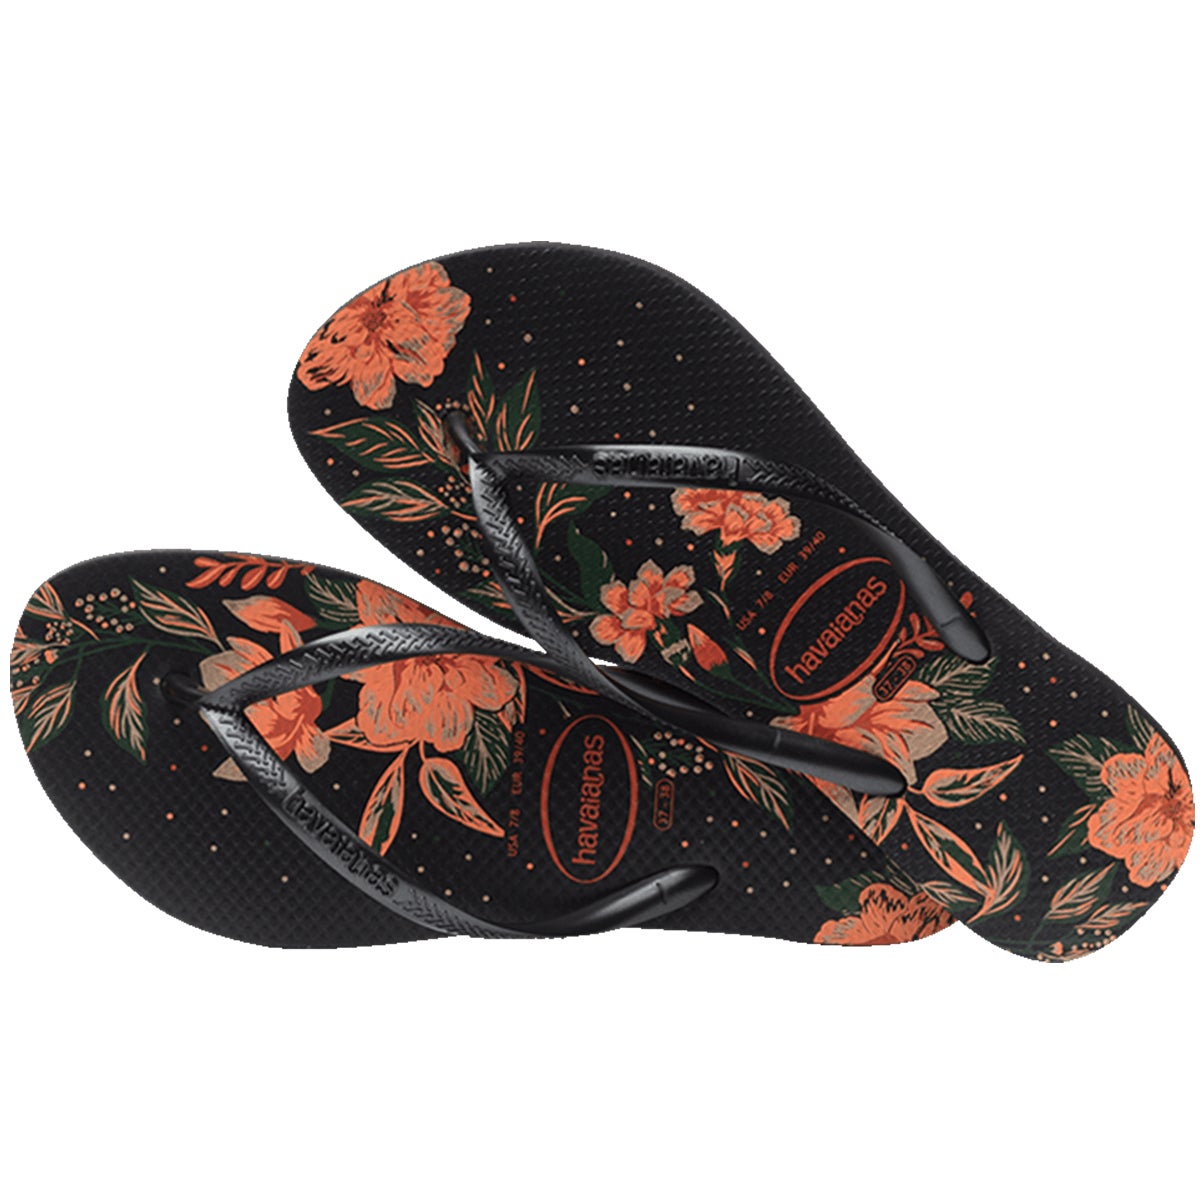 Havaianas Women's Slim Organic Flip Flop Sandal - Black Floral 